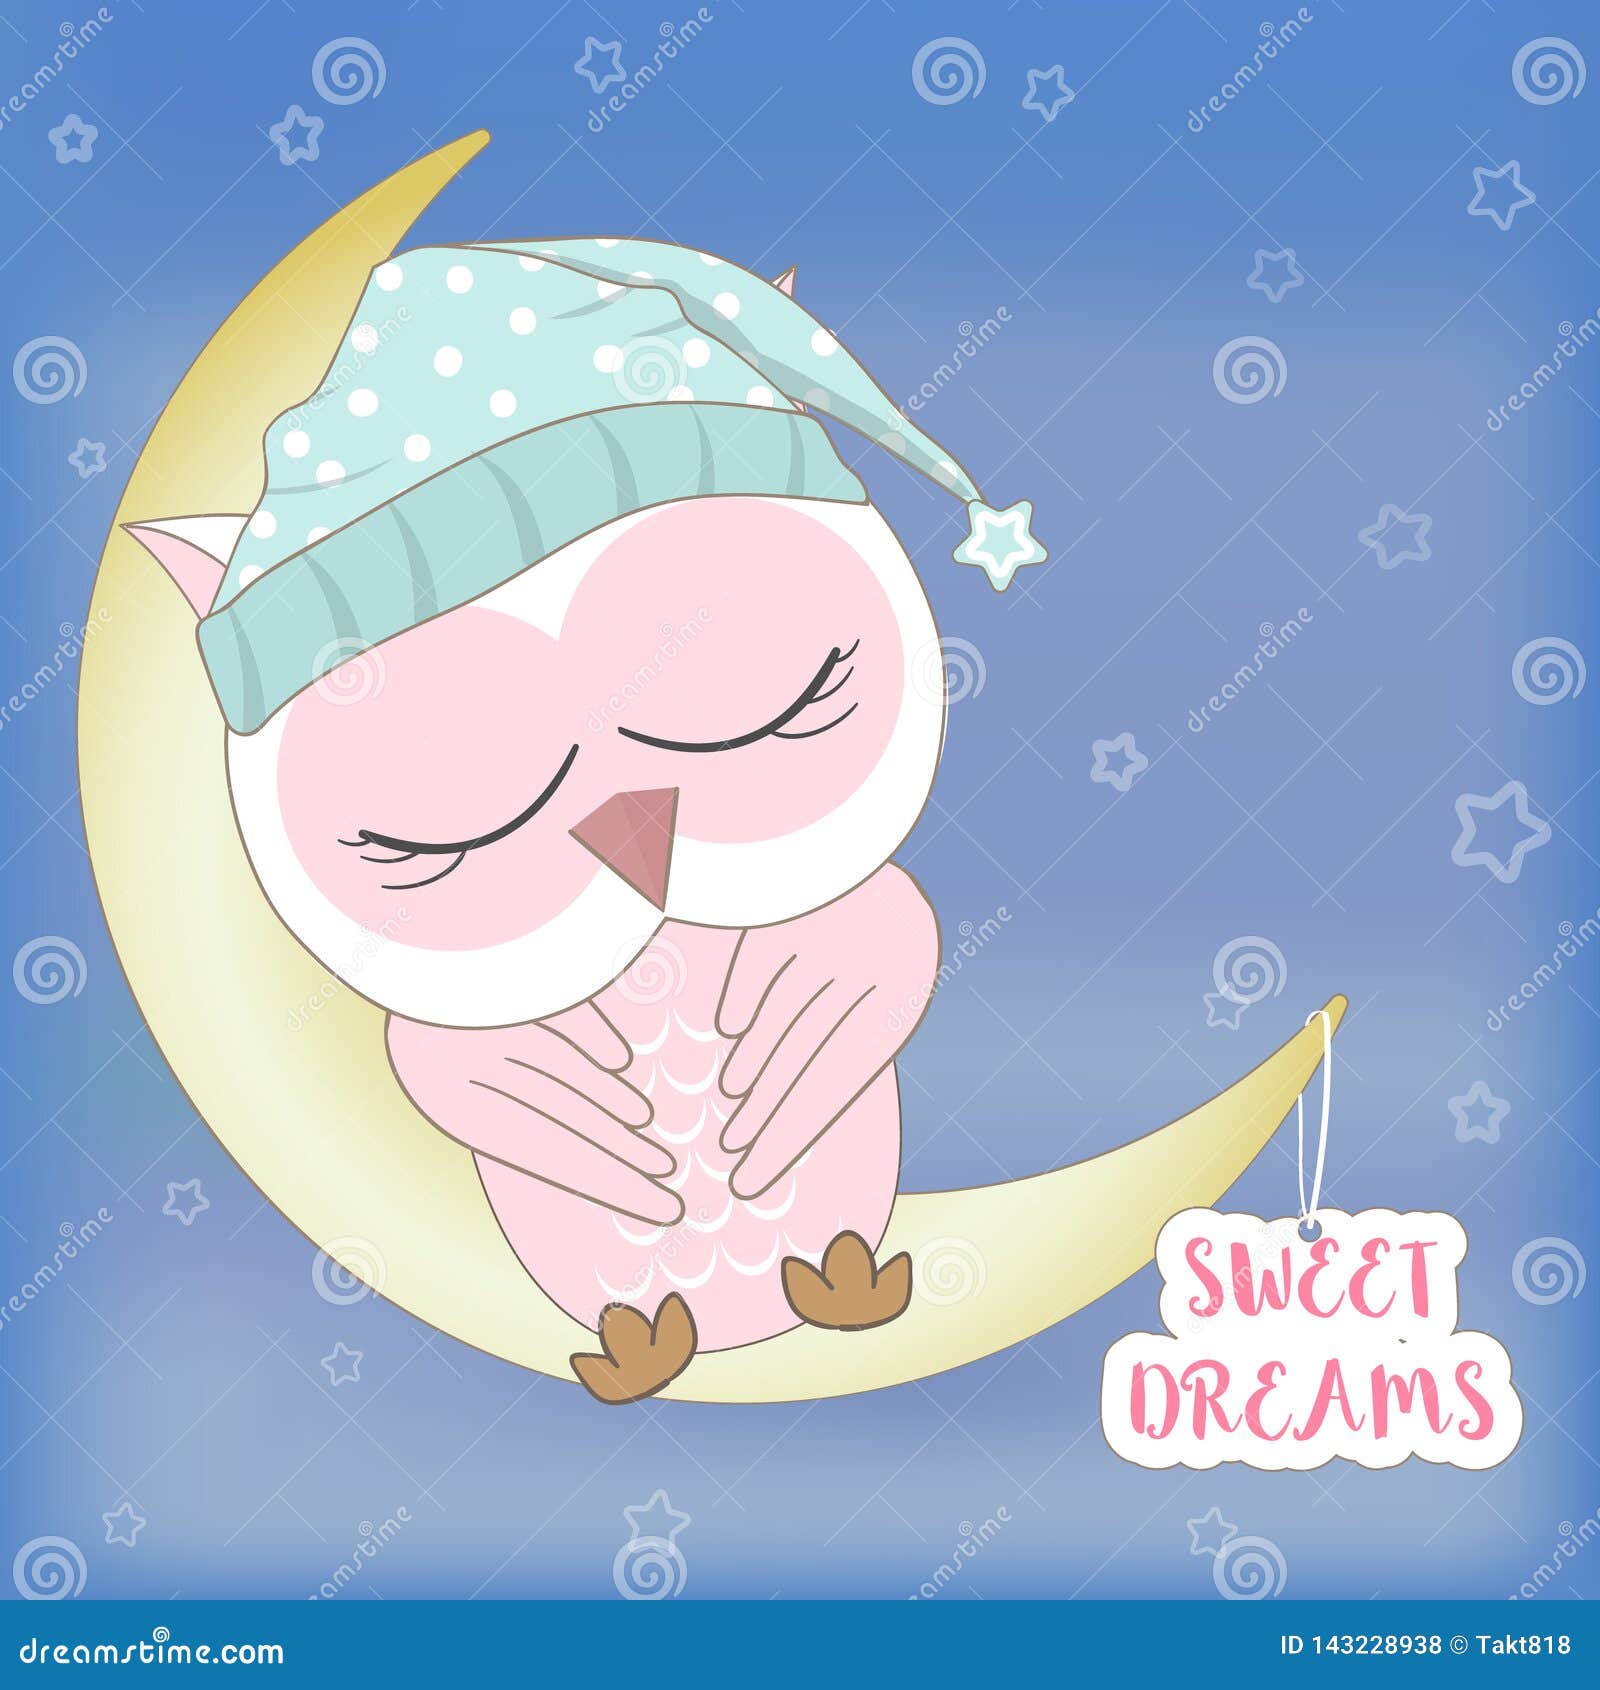 Cute Pink Owl Sleeping with Sweet Dreams Animal Cartoon Illustration ...